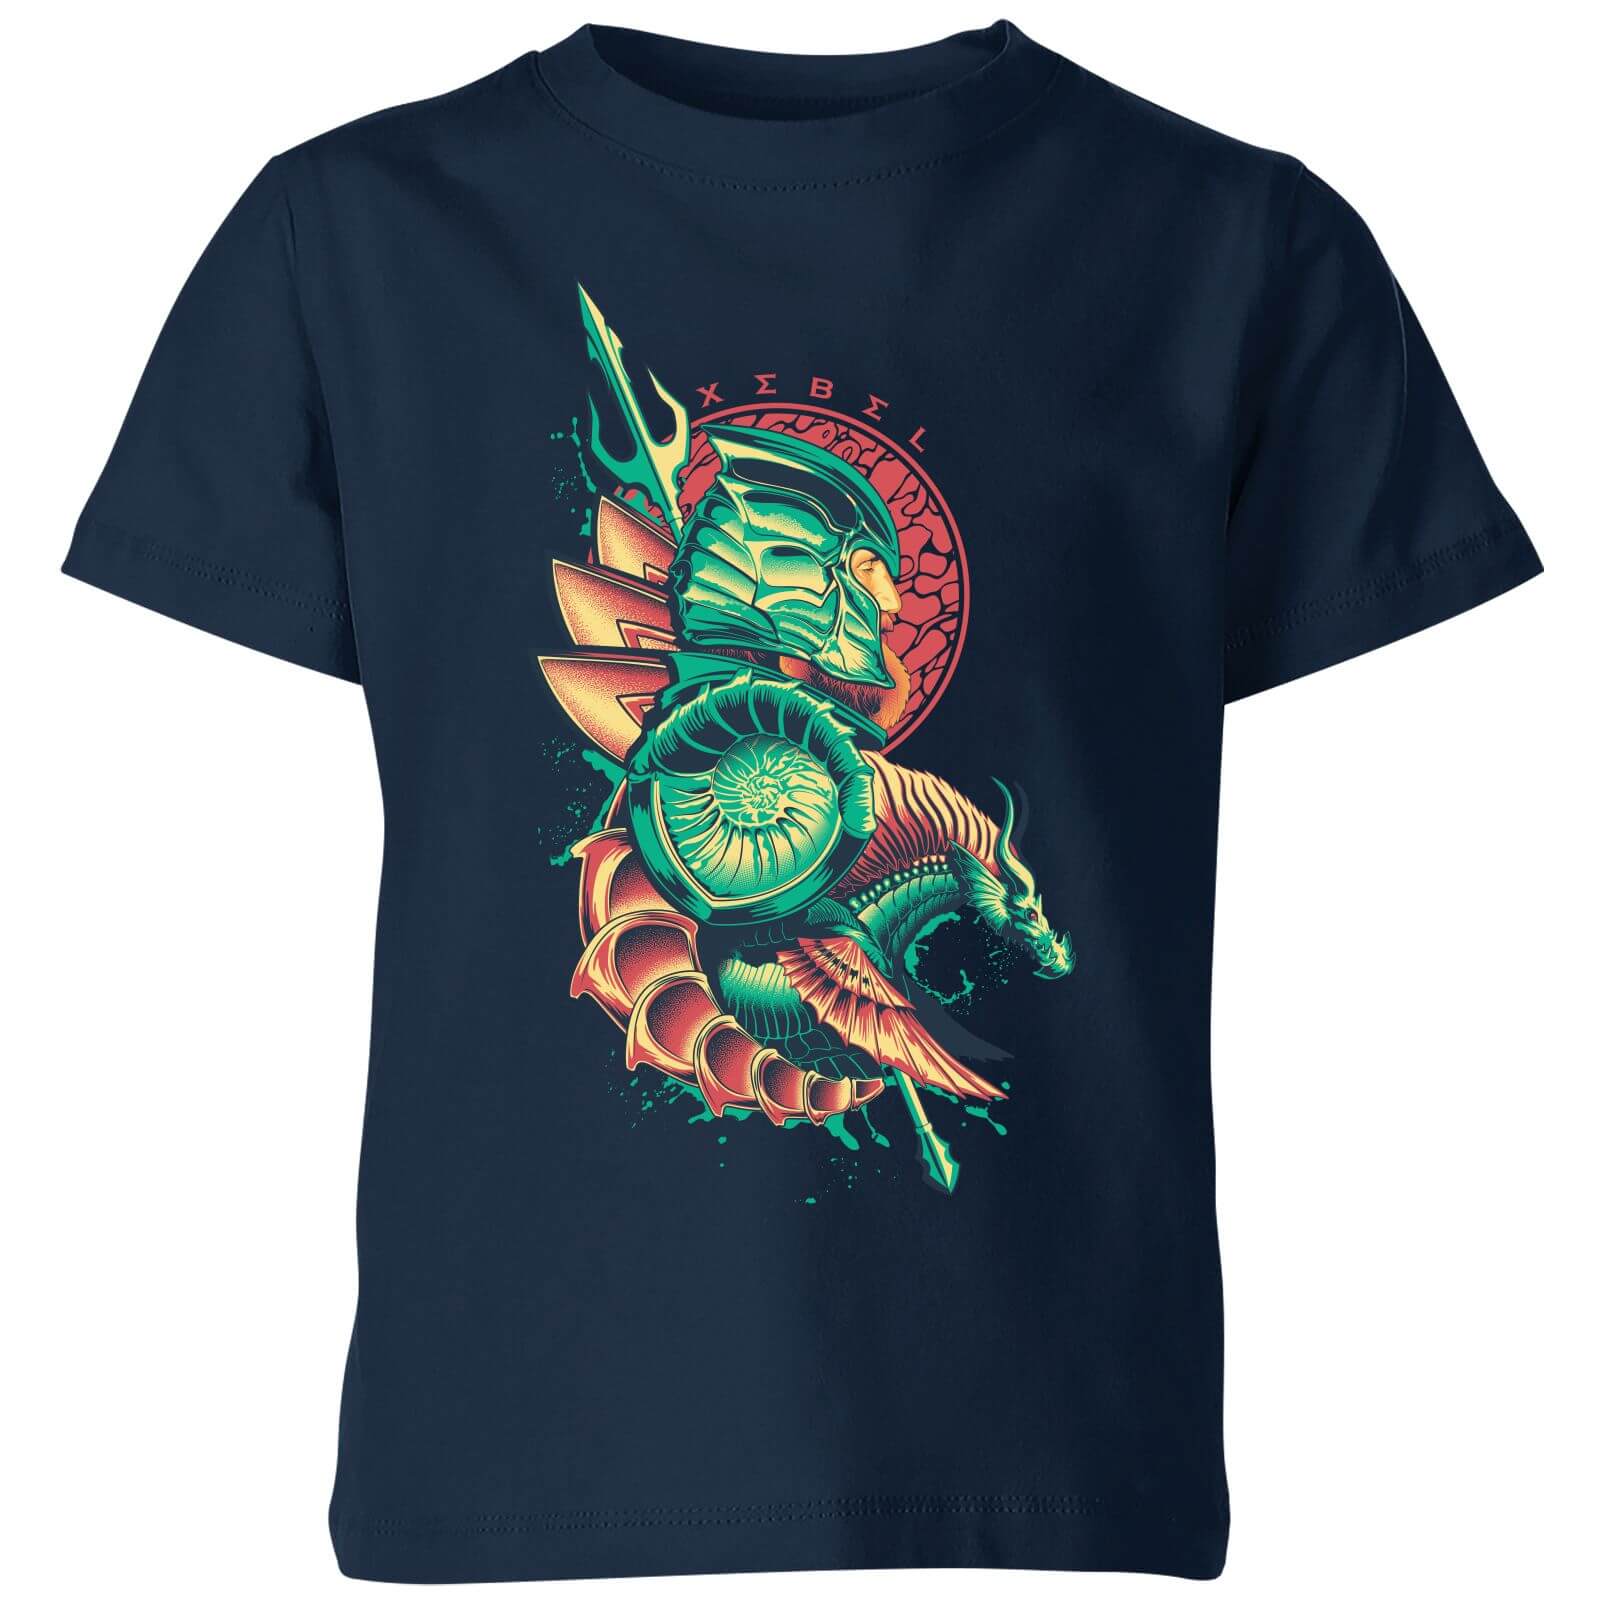 Aquaman Xebel Kids' T-Shirt - Navy - 5-6 Years - Navy